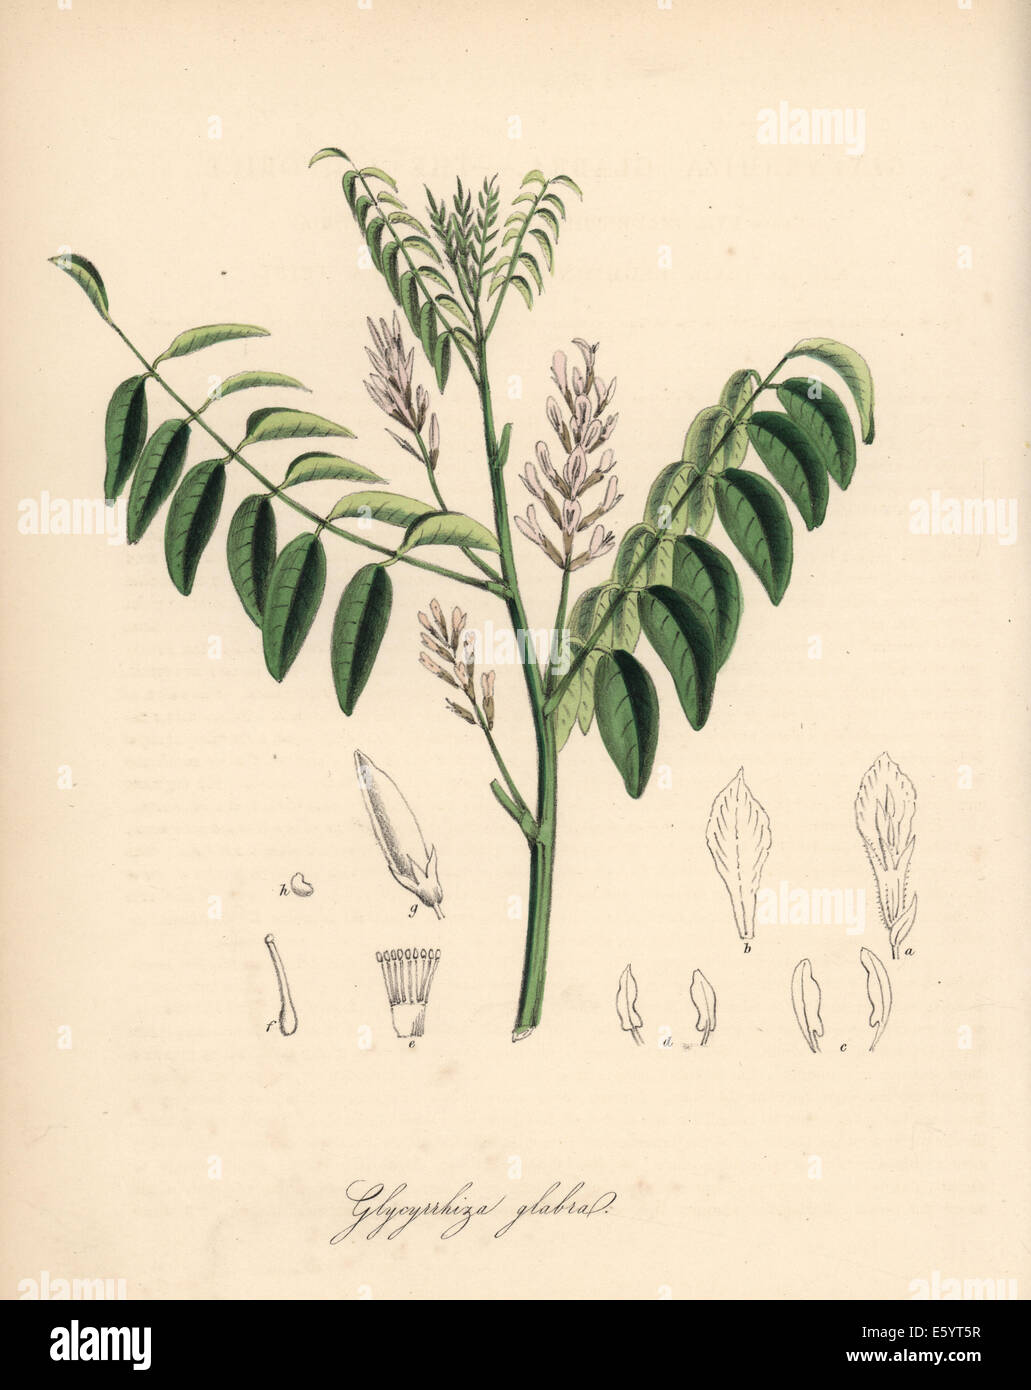 Liquorice or licorice plant, Glycyrrhiza glabra. Stock Photo